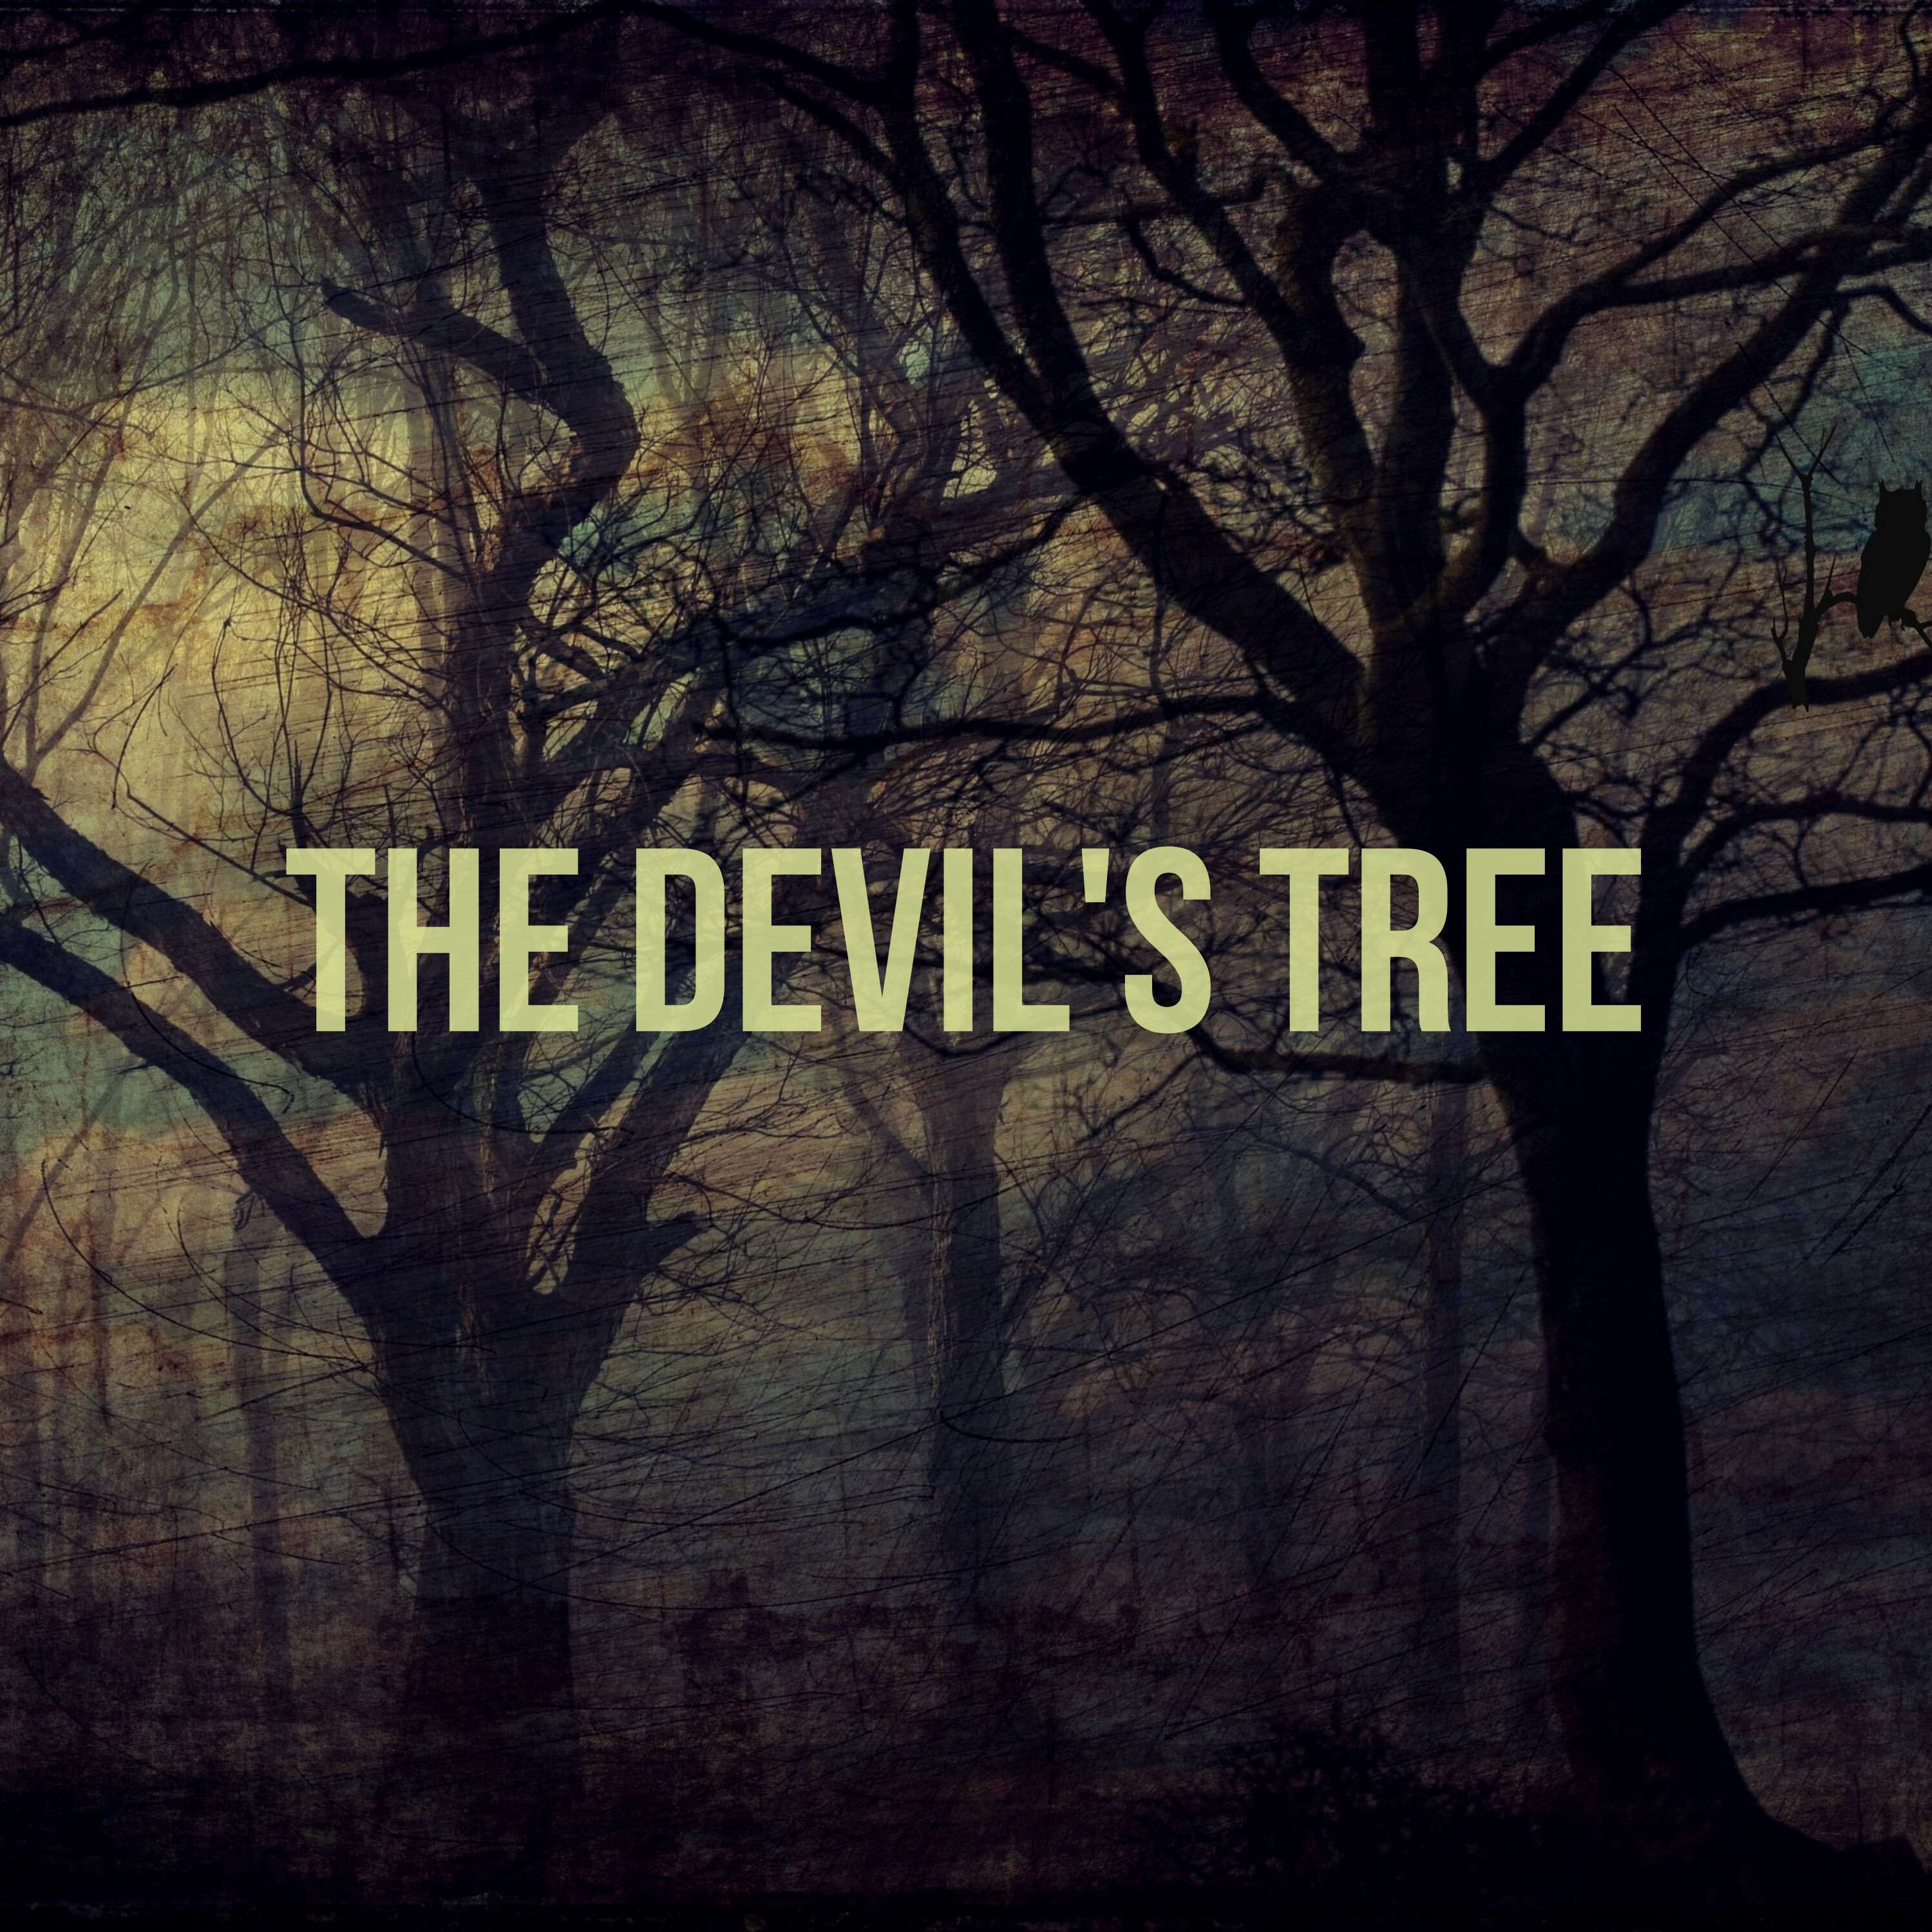 46: The Devil's Tree